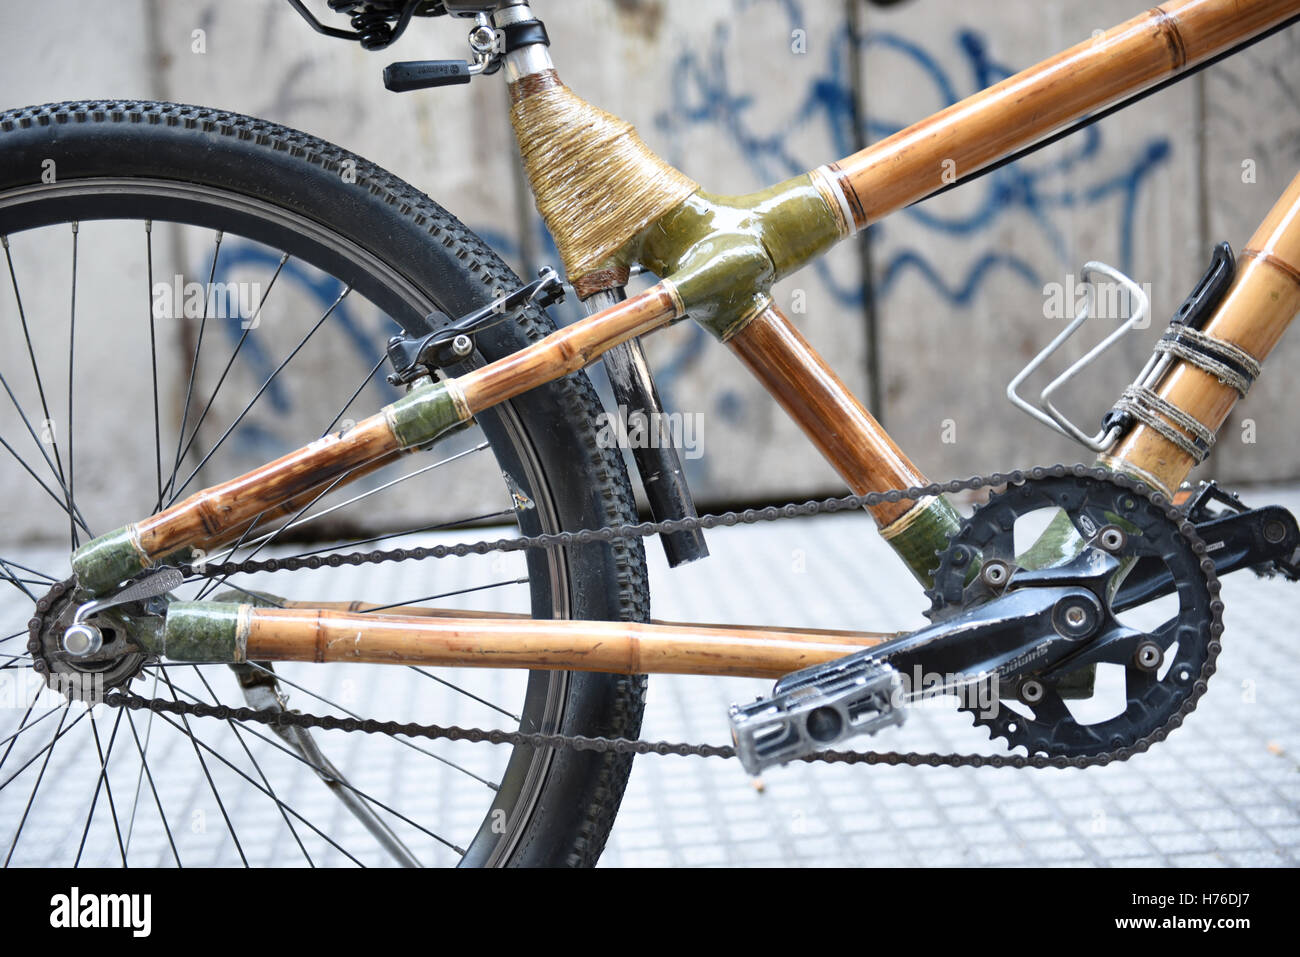 Bamboo bike -Fotos und -Bildmaterial in hoher Auflösung – Alamy